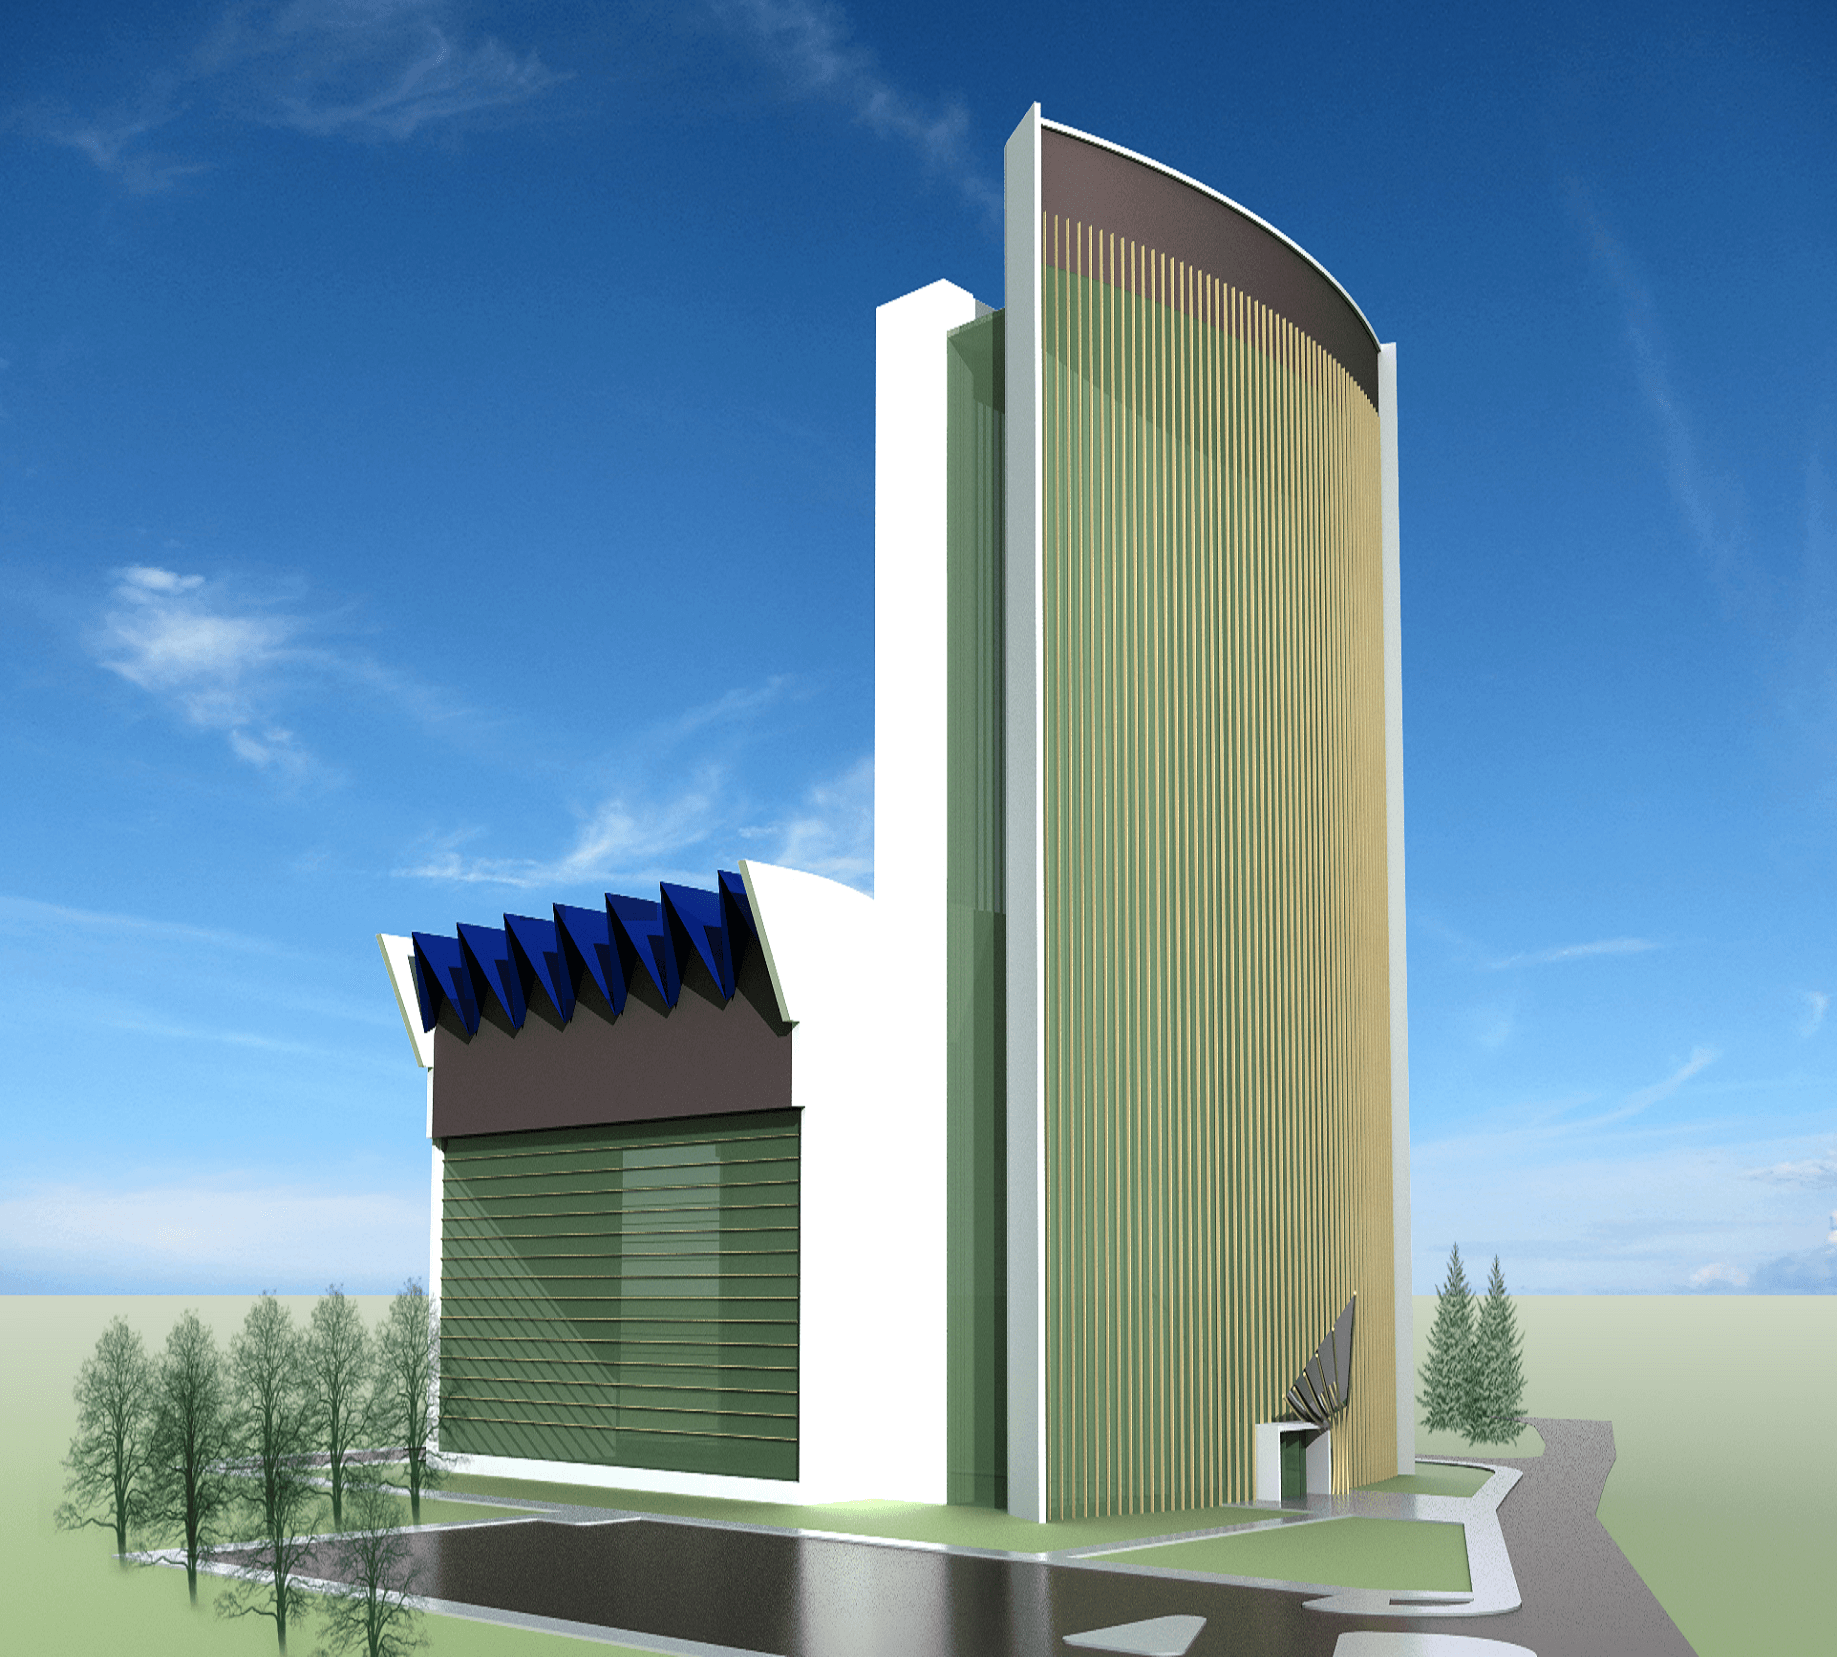 Internationa Advanced Scientific Research and Development Tower